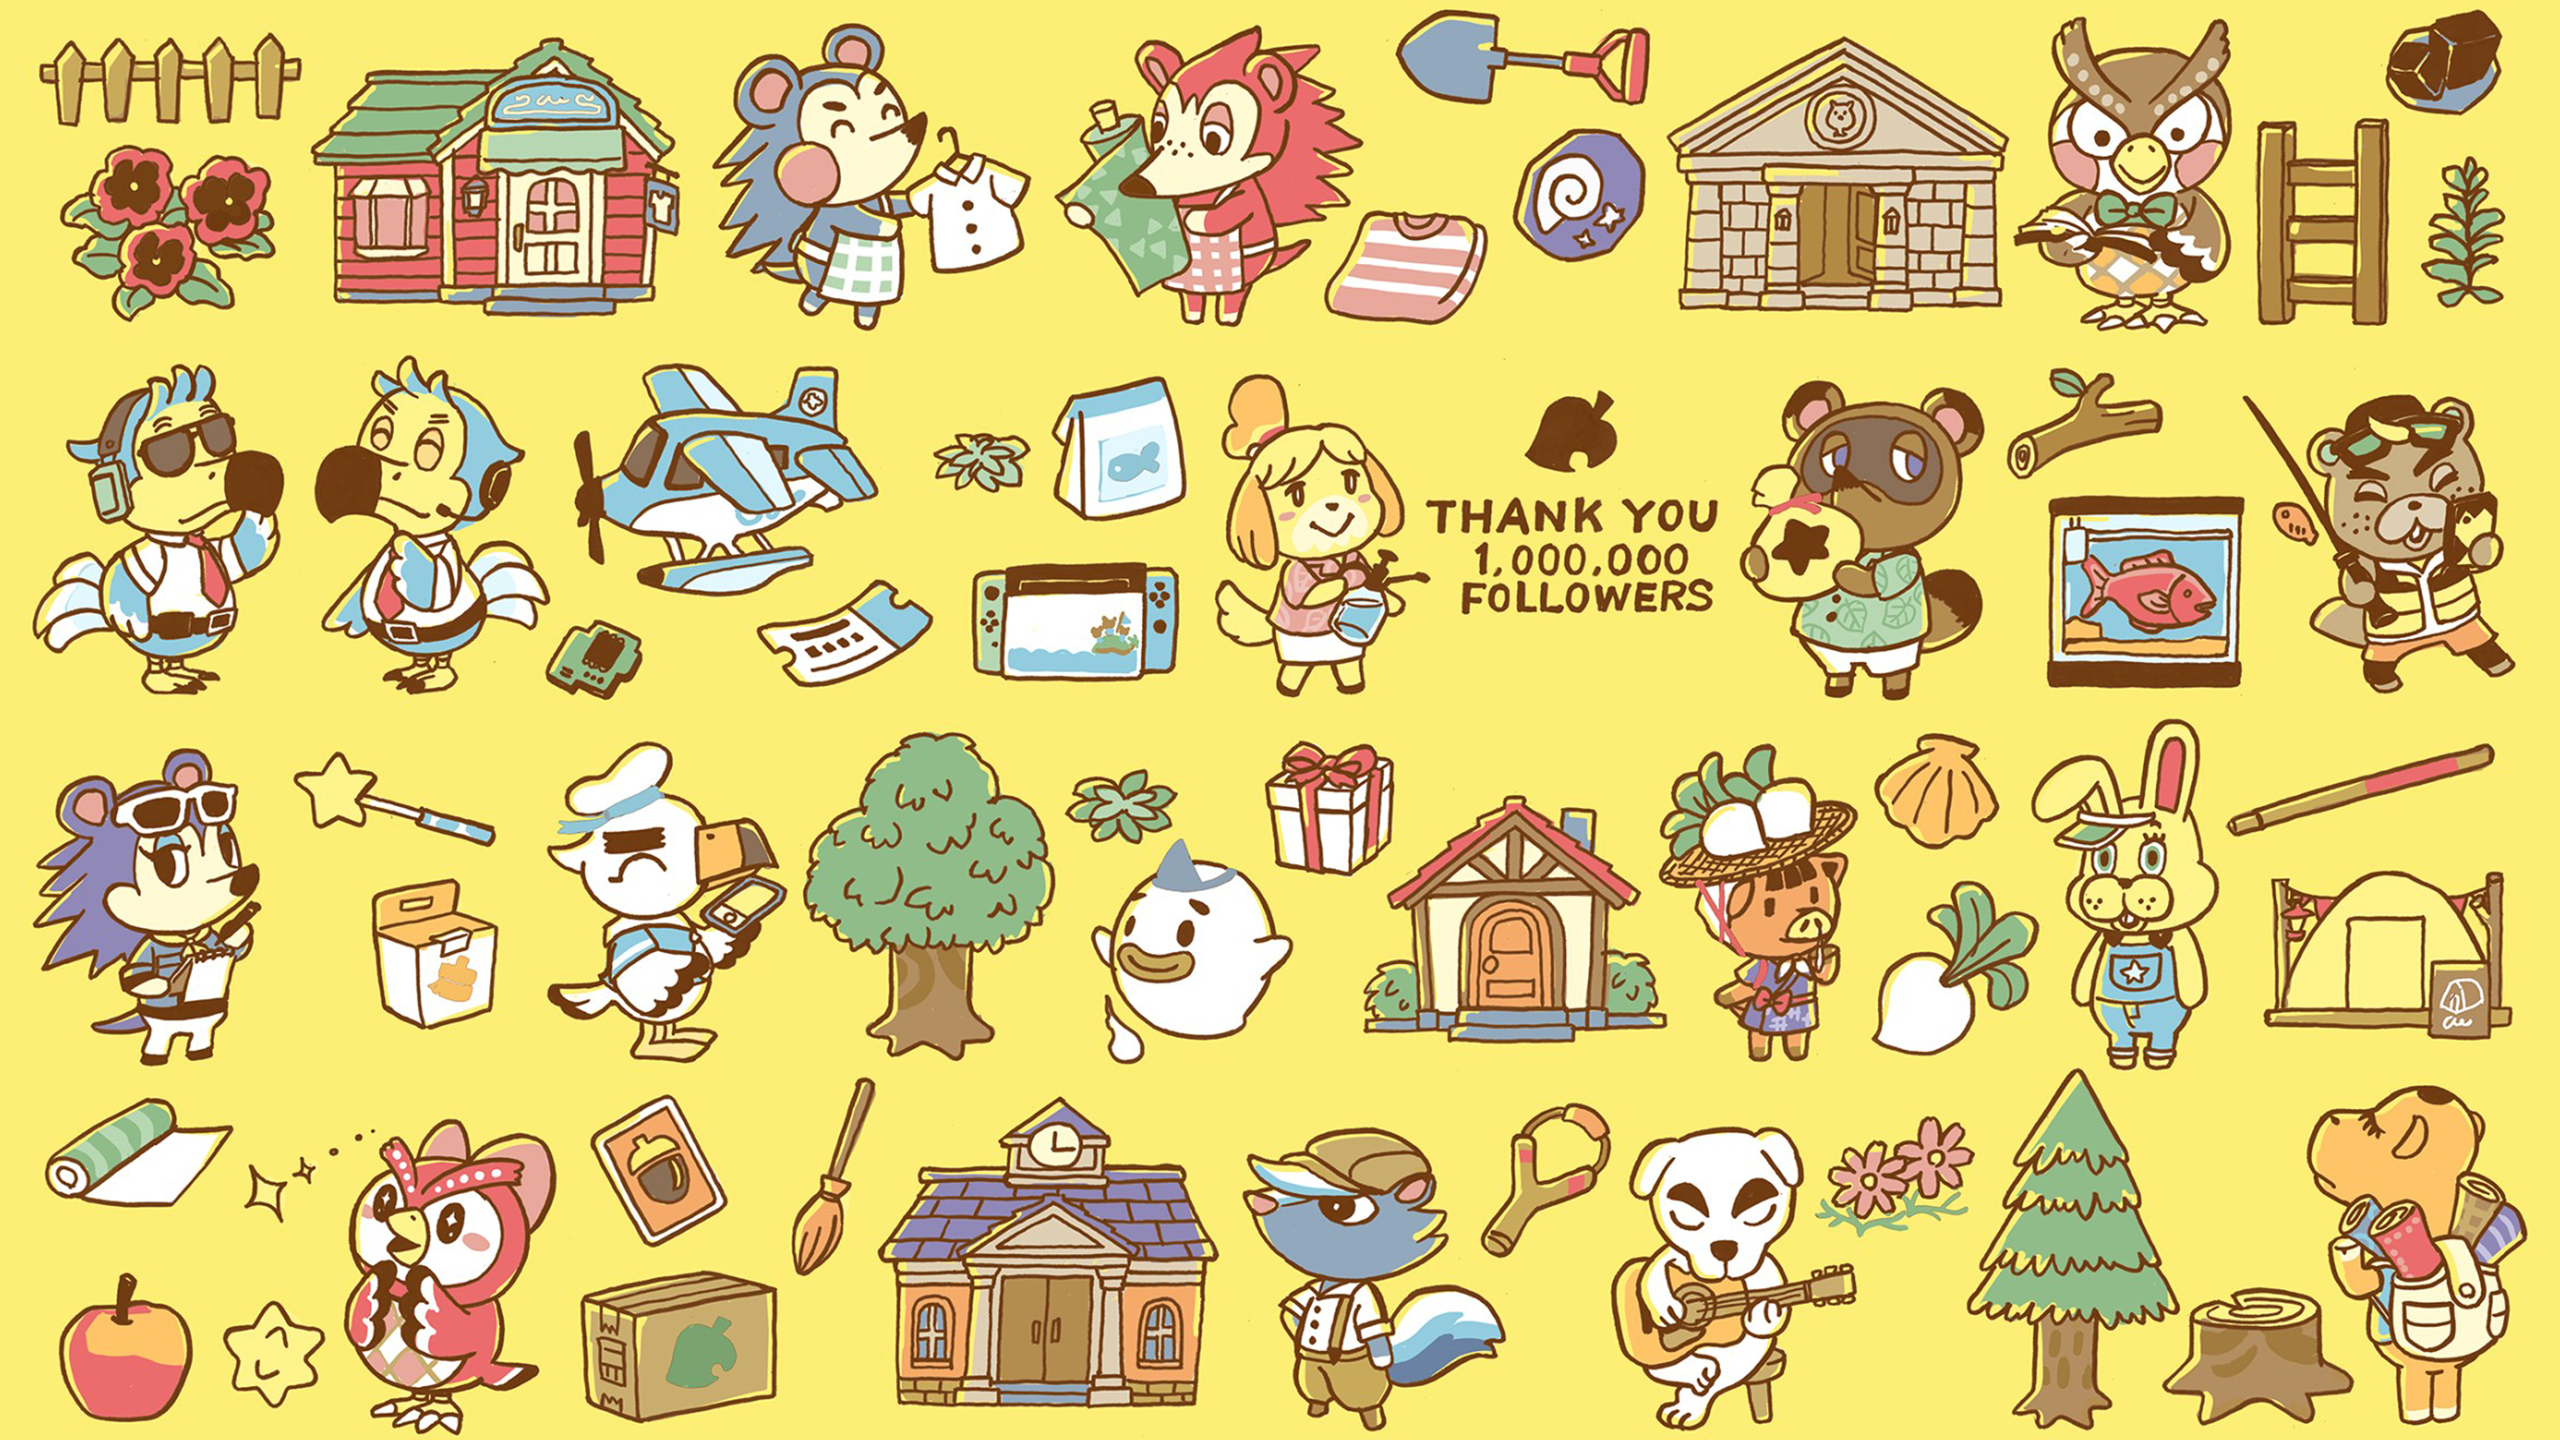 New Themed My Nintendo Wallpapers Celebrate Animal Crossing New Horizons  Island Living  GameLuster